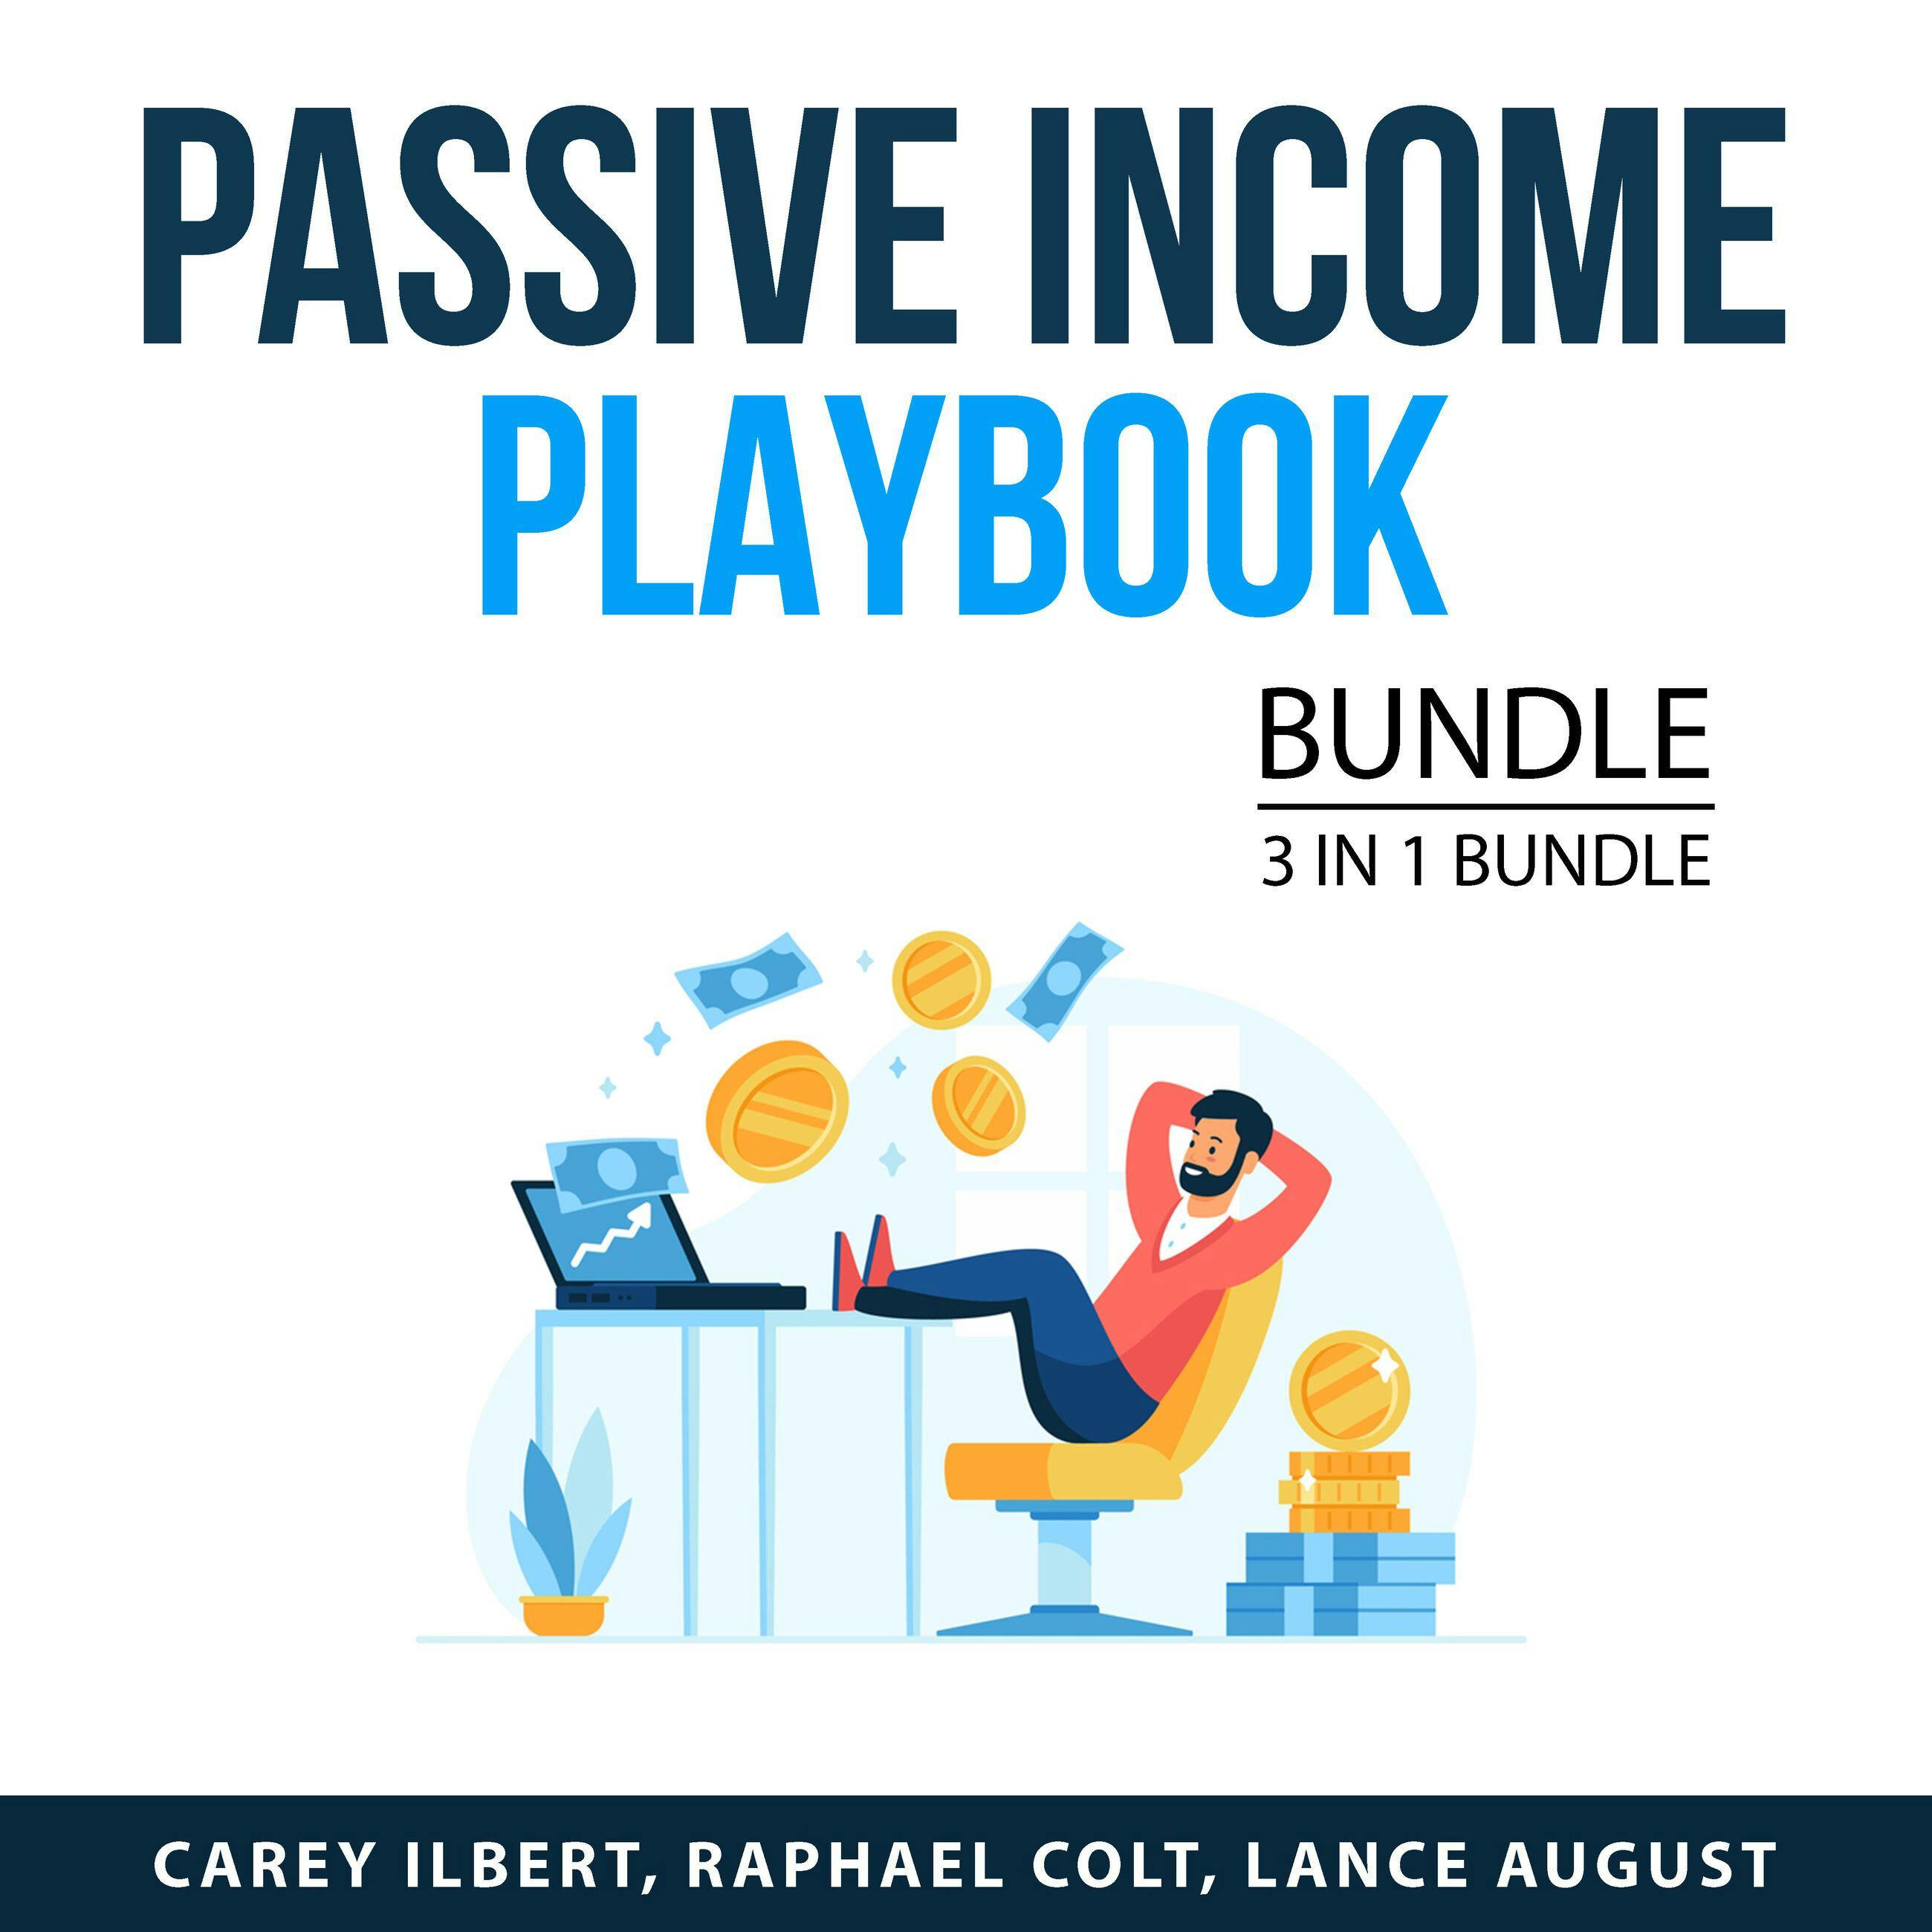 Passive Income Playbook Bundle, 3 in 1 Bundle: Passive Income Success, Passive Income Options, Financial Independence Blueprint - undefined